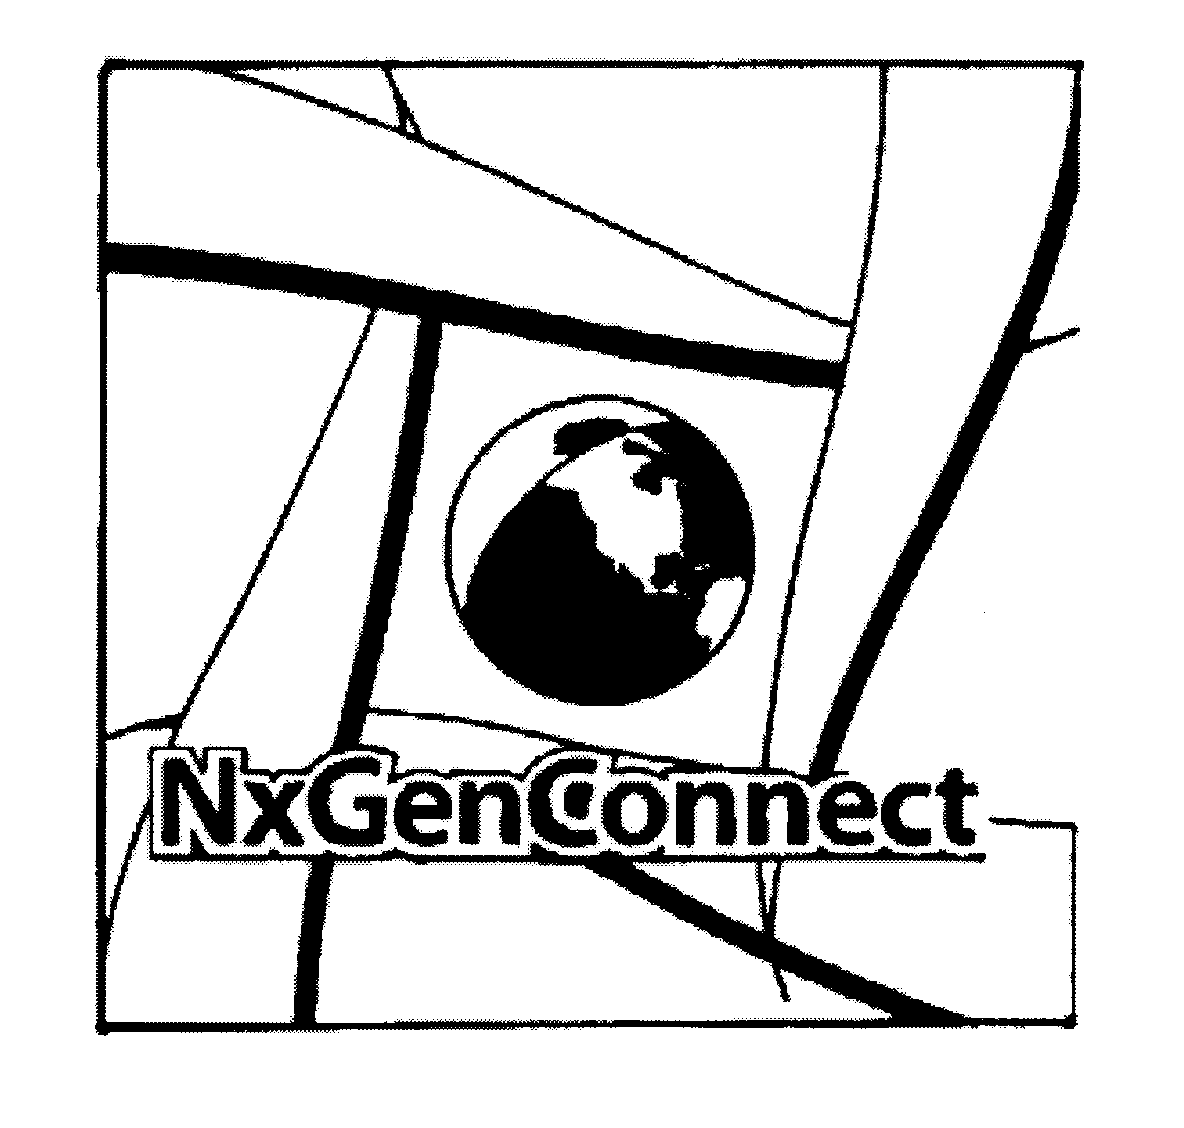  NXGENCONNECT